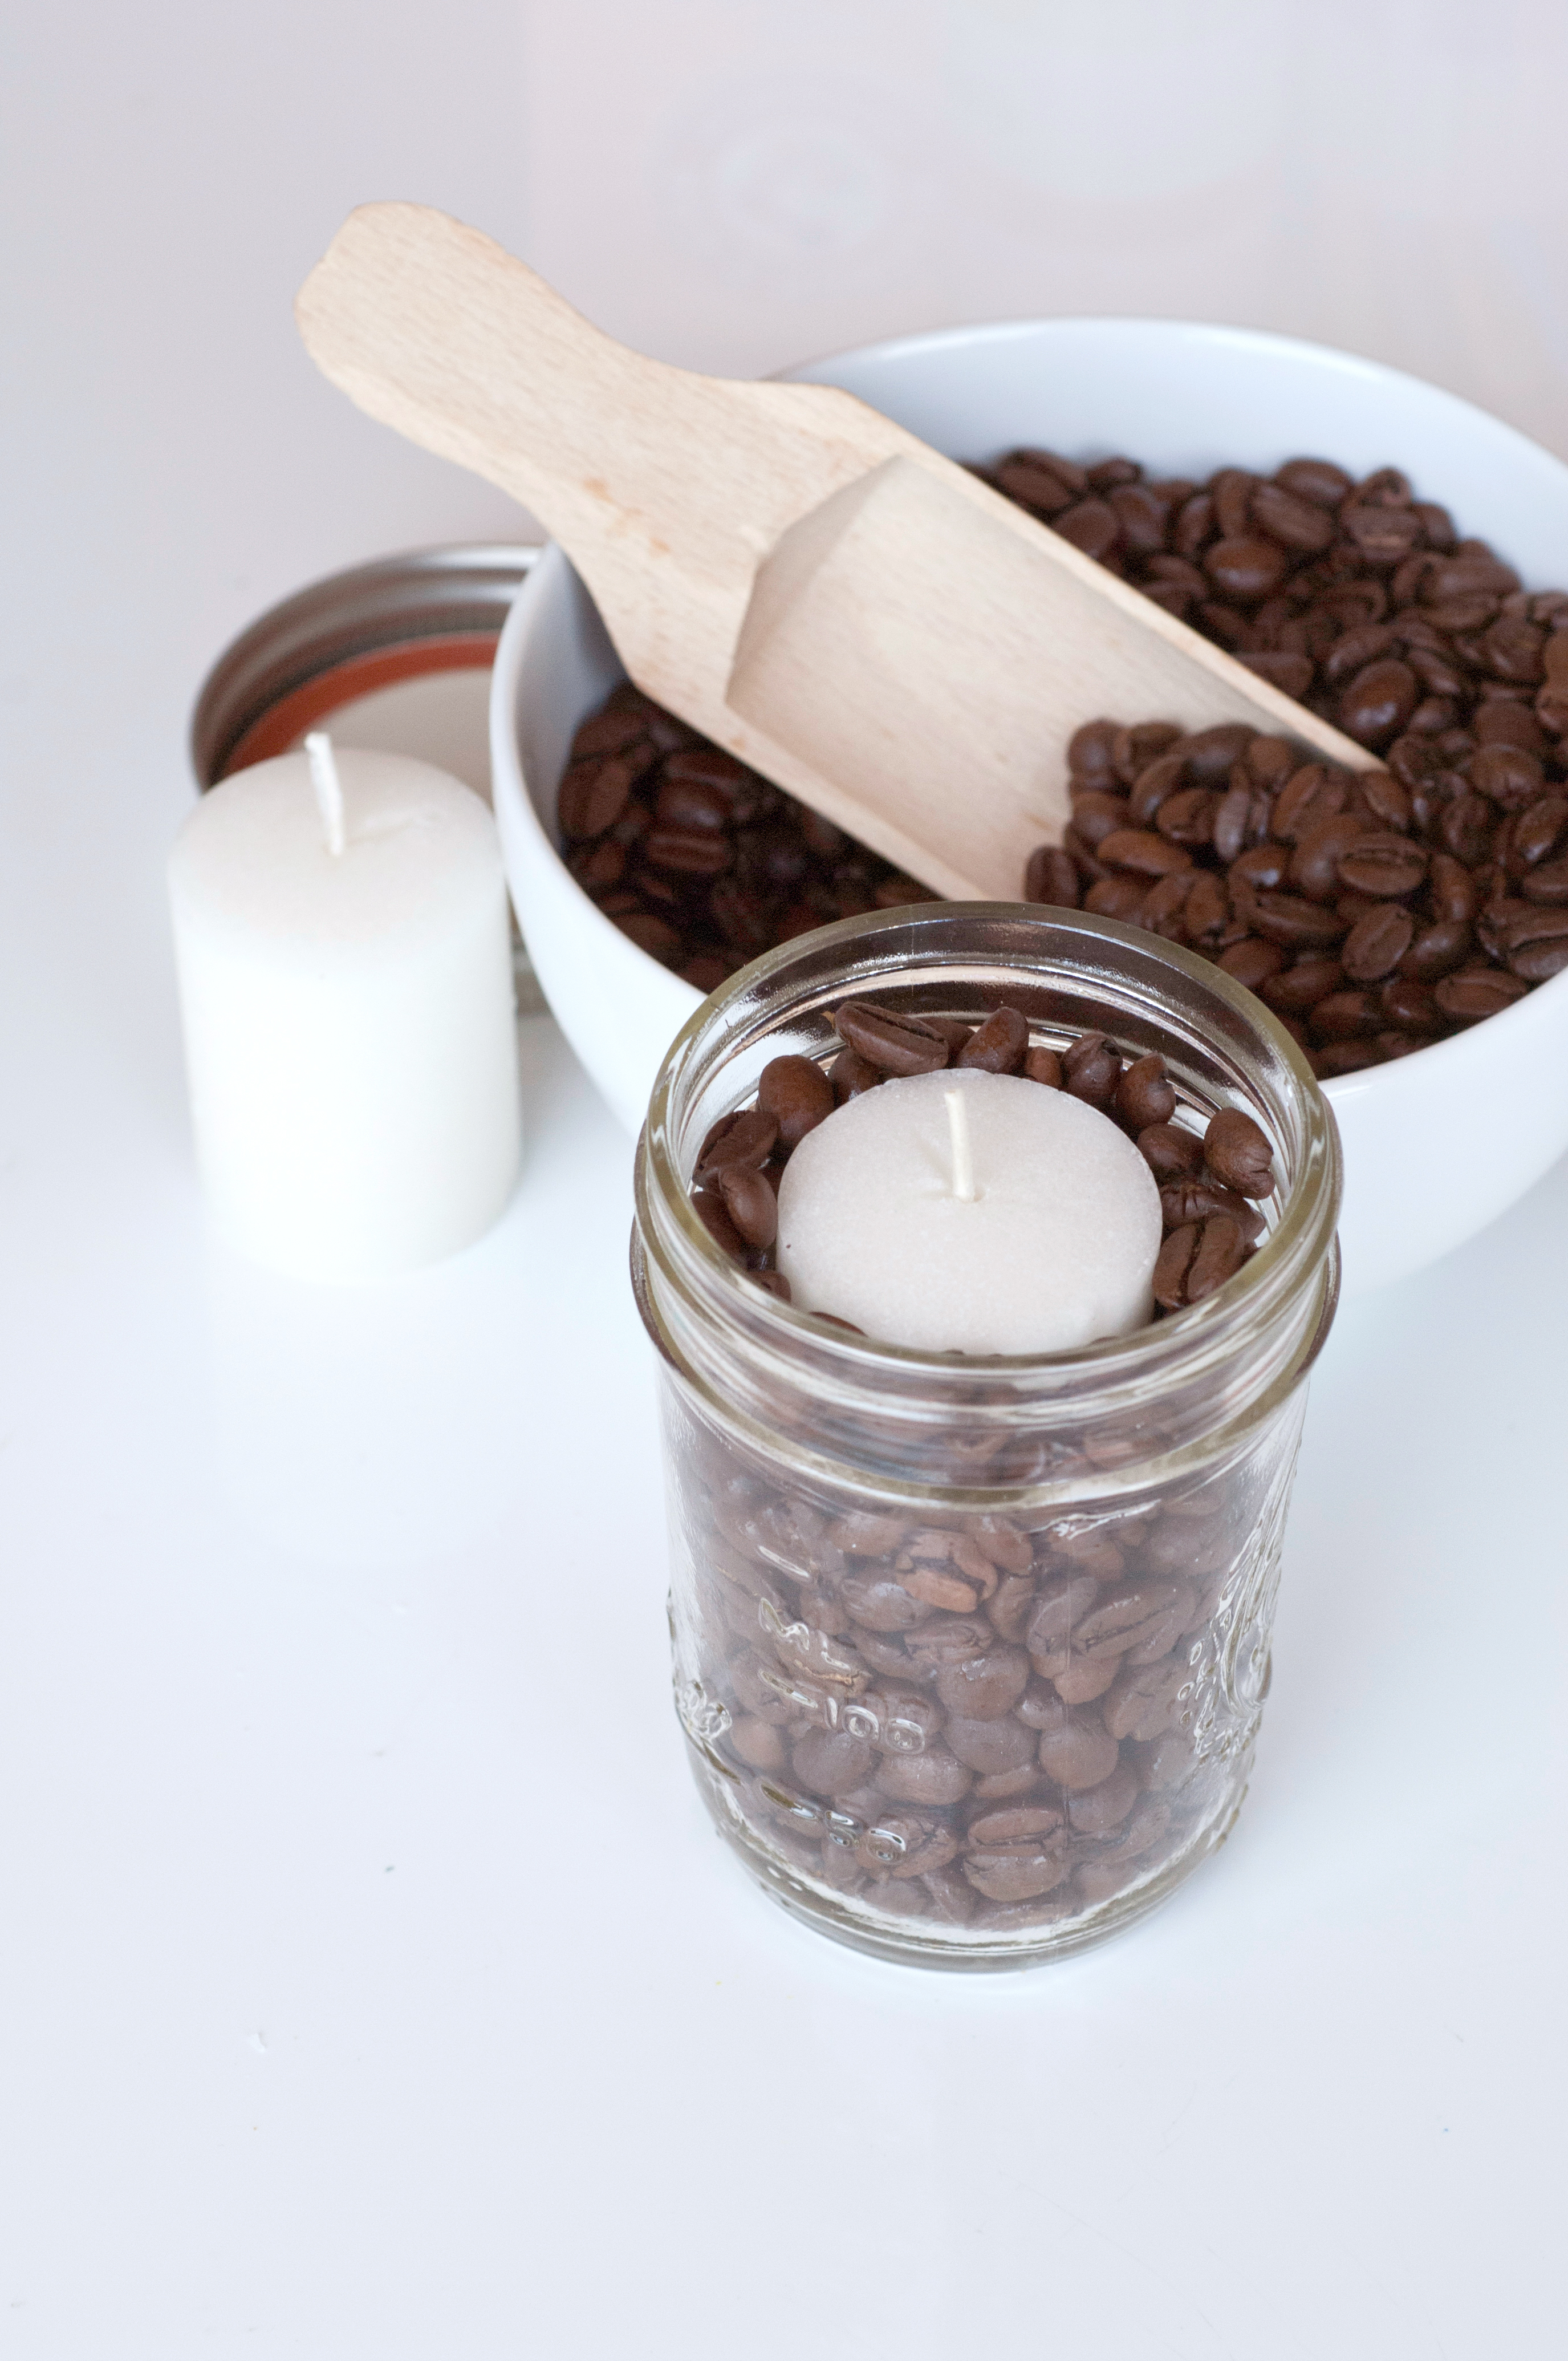 How To Make Coffee Air Freshener